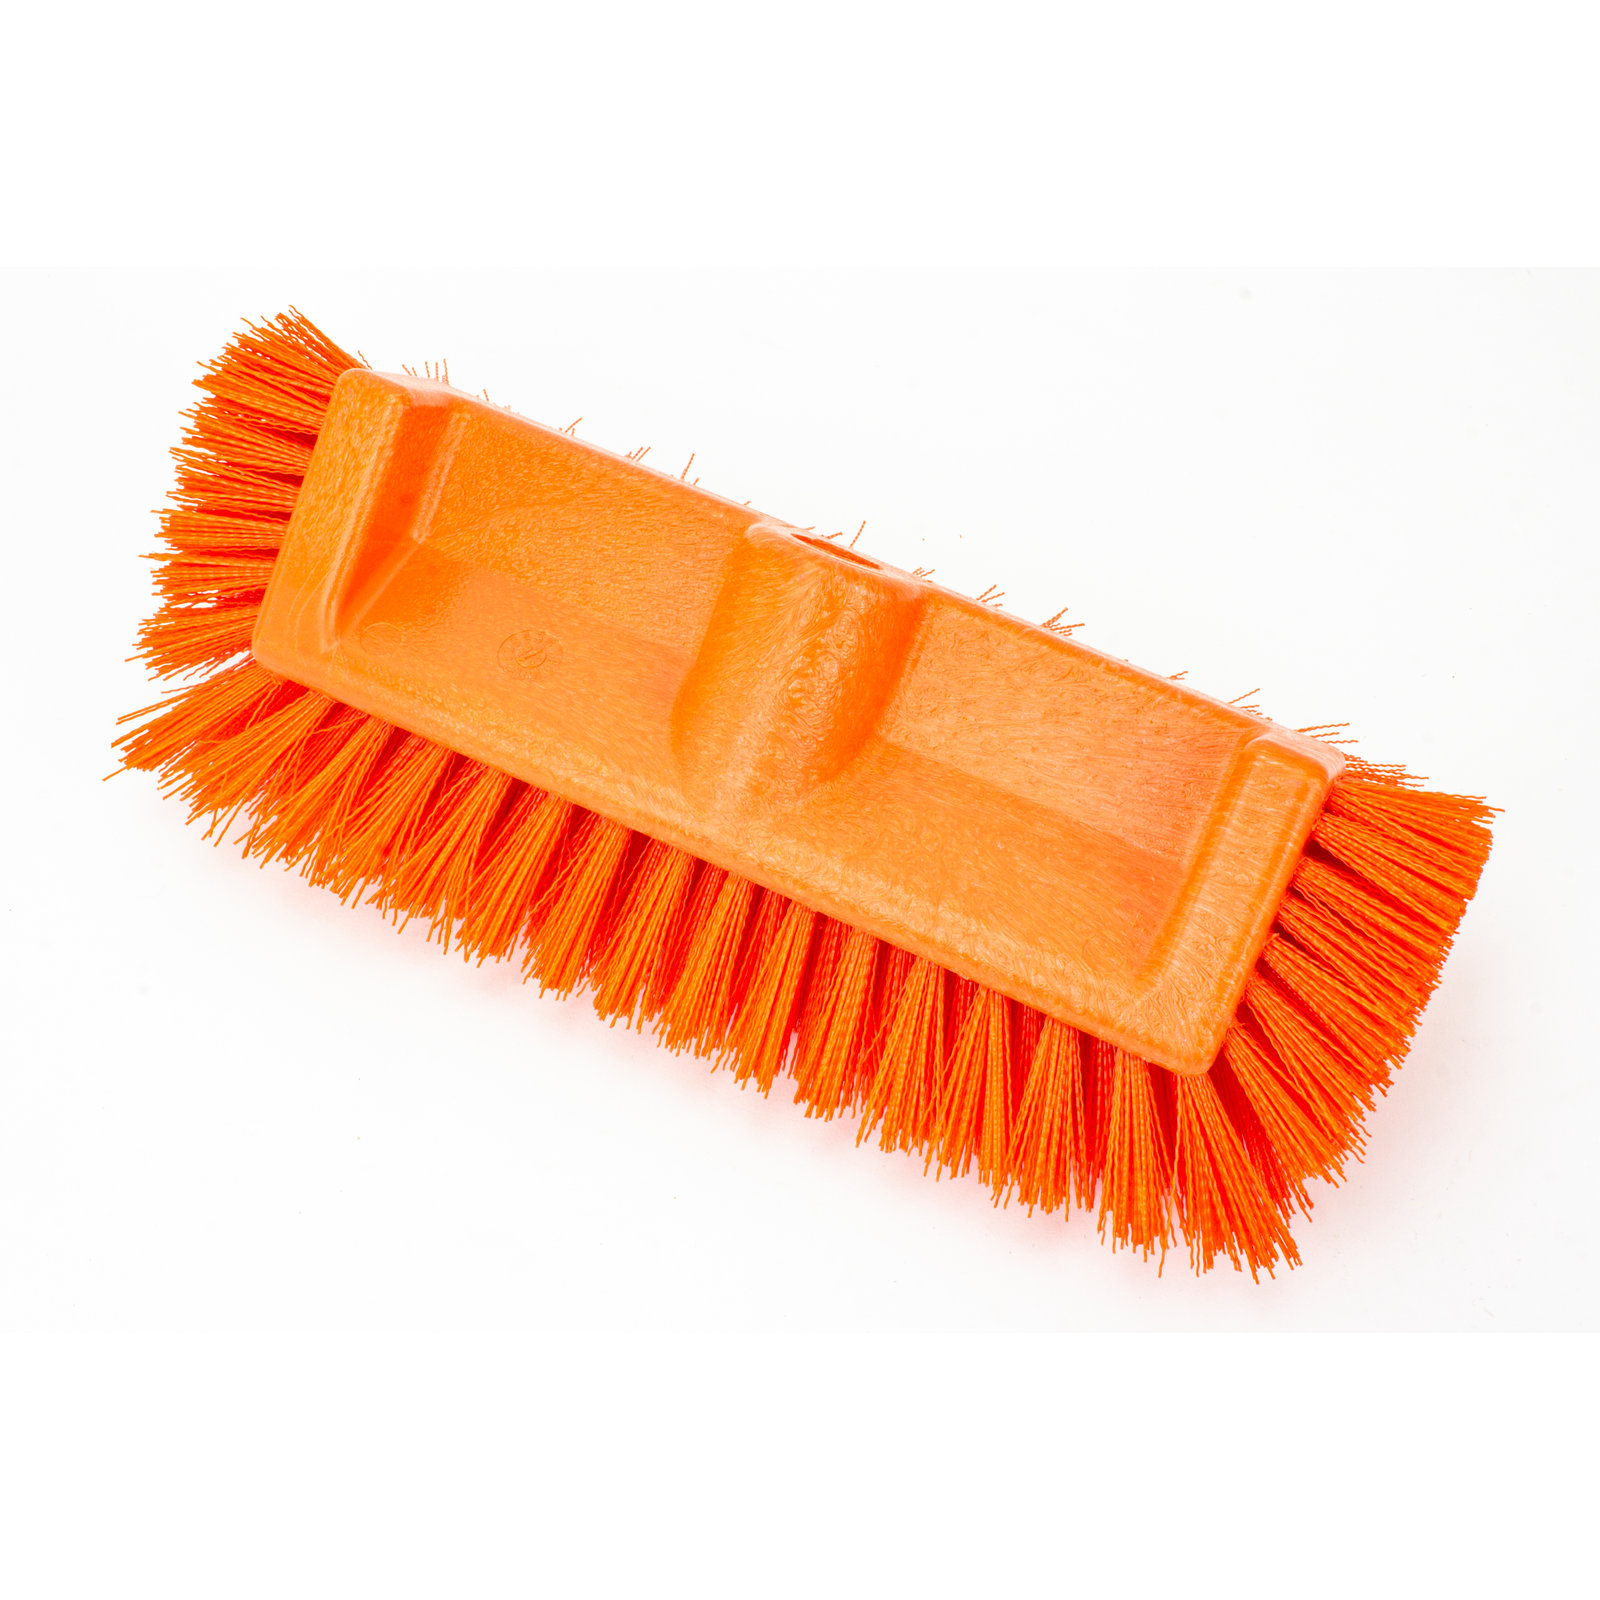 Peachy Clean 6335954 4.5 in. Non-Scratch Scrubber for Multi-Purpose,  Orange